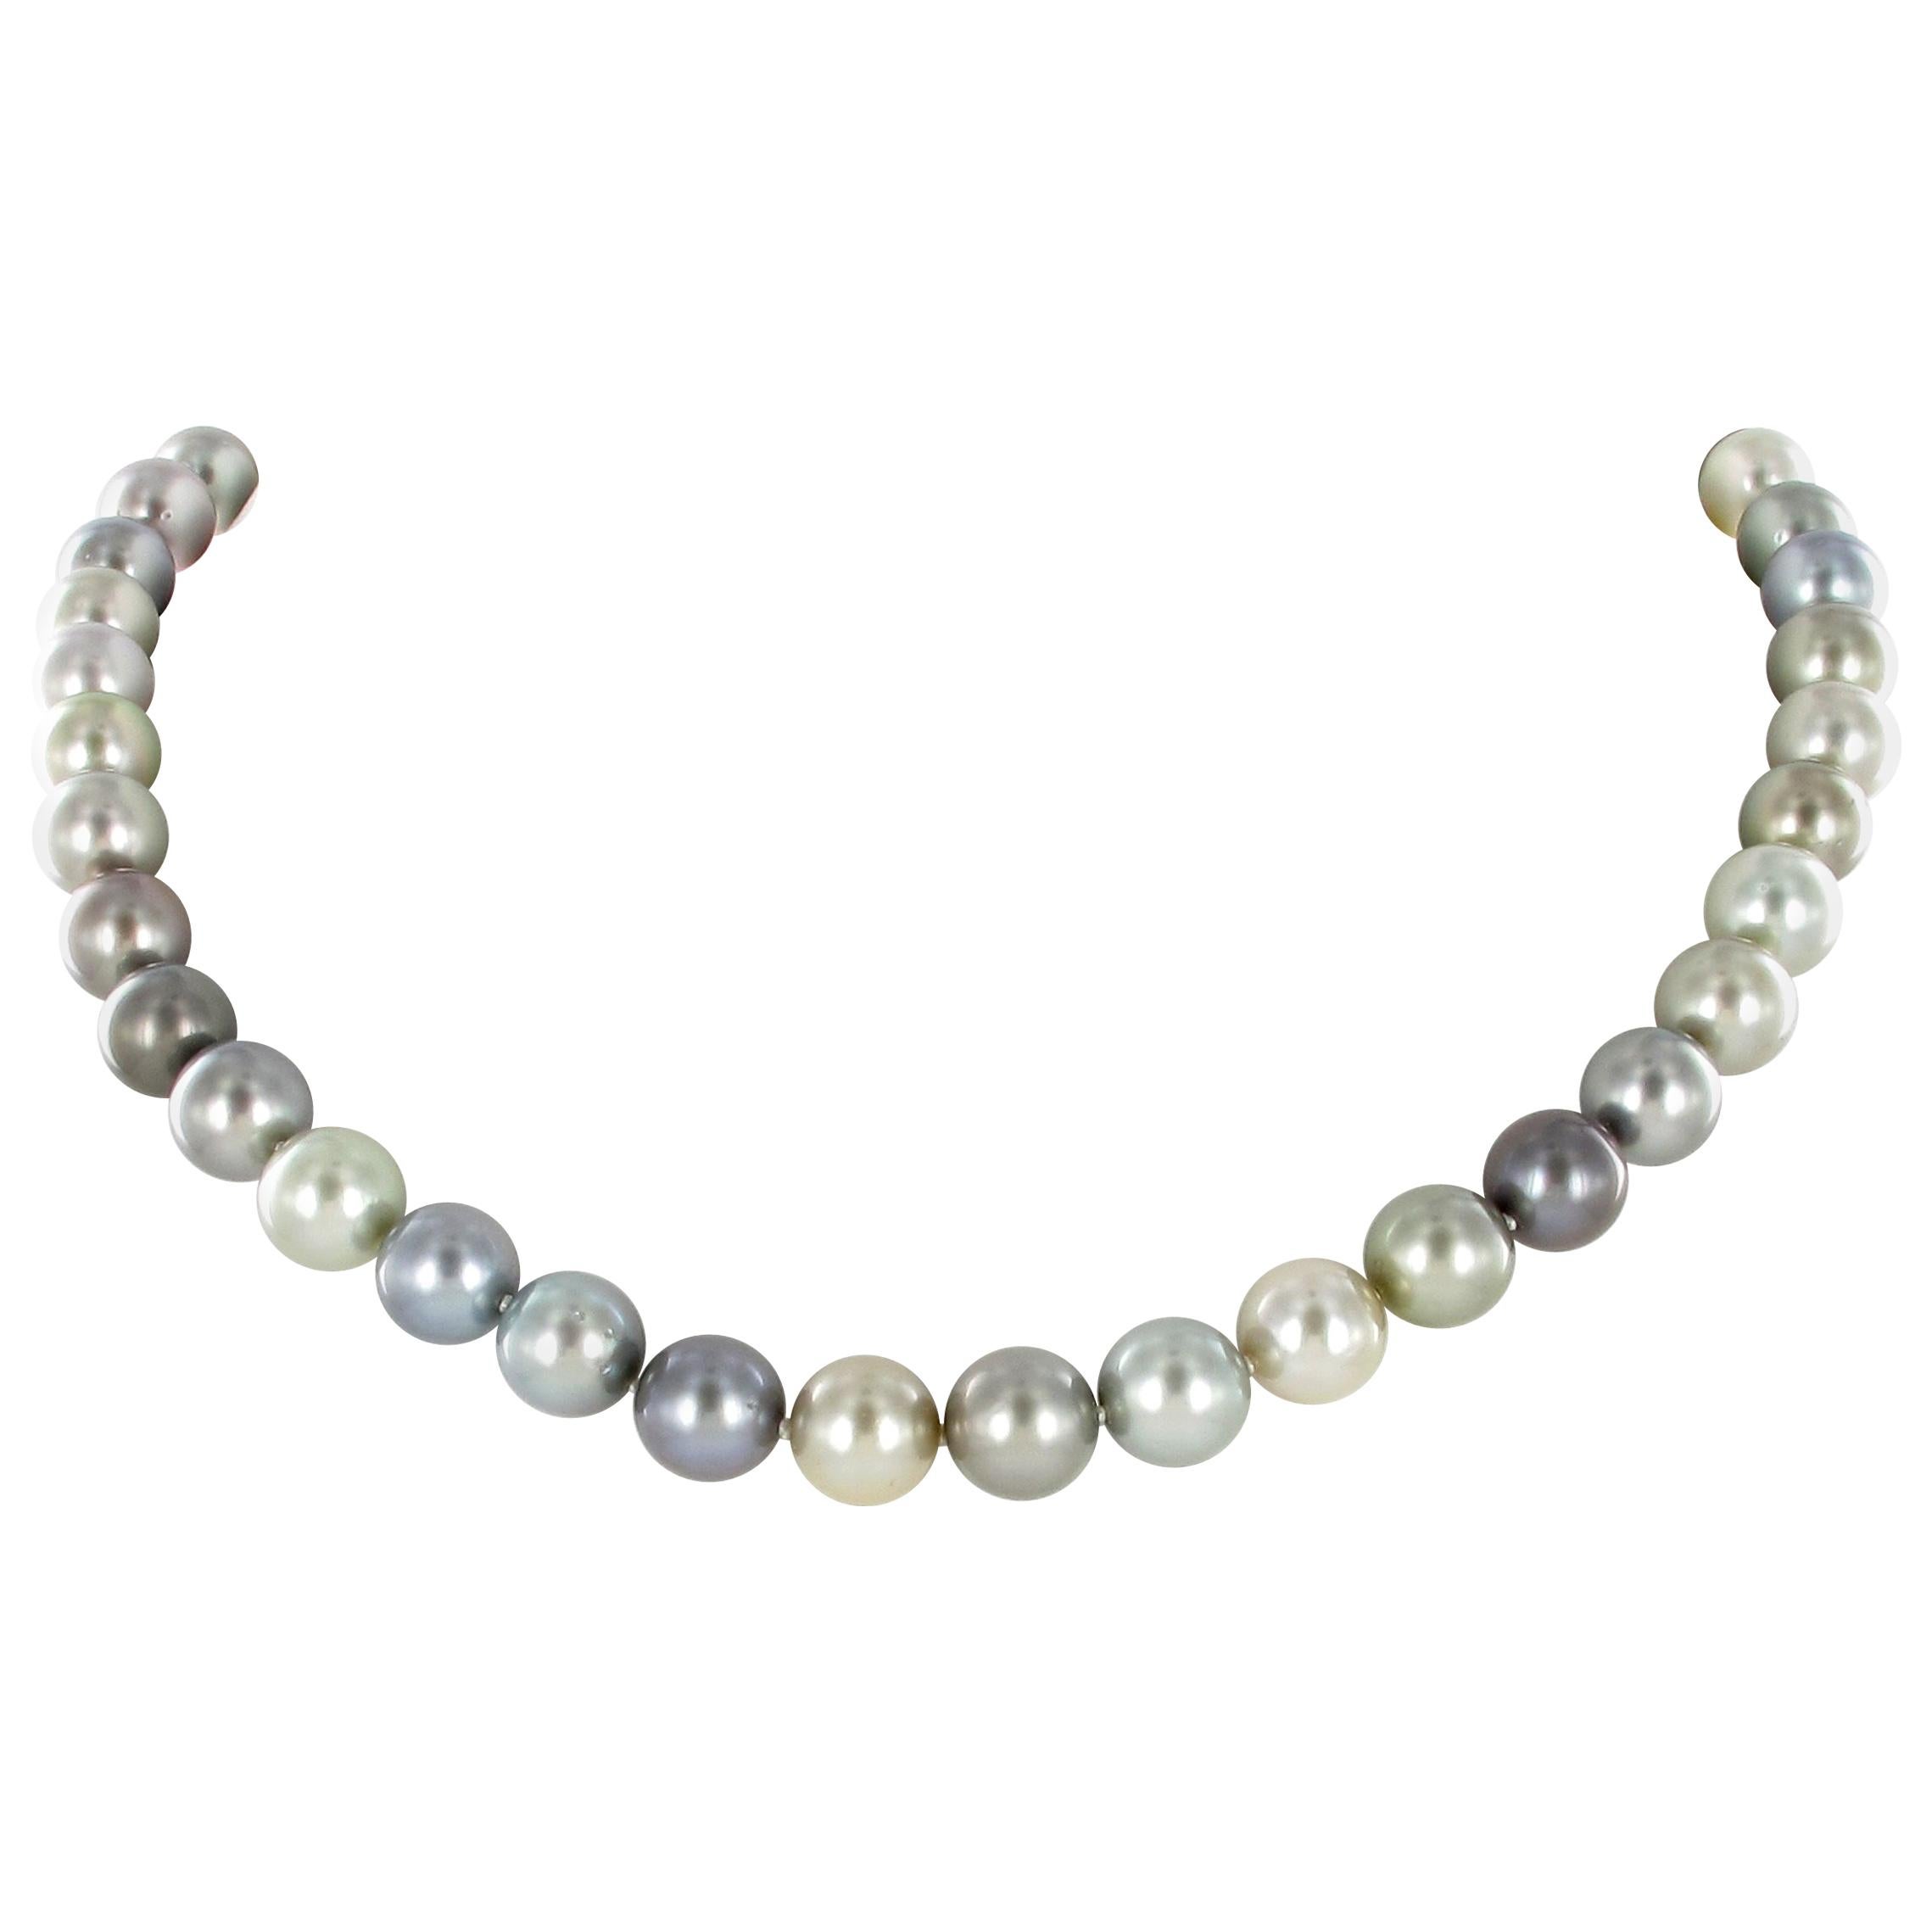 Collier de perles de culture de Tahiti multicolores et diamants